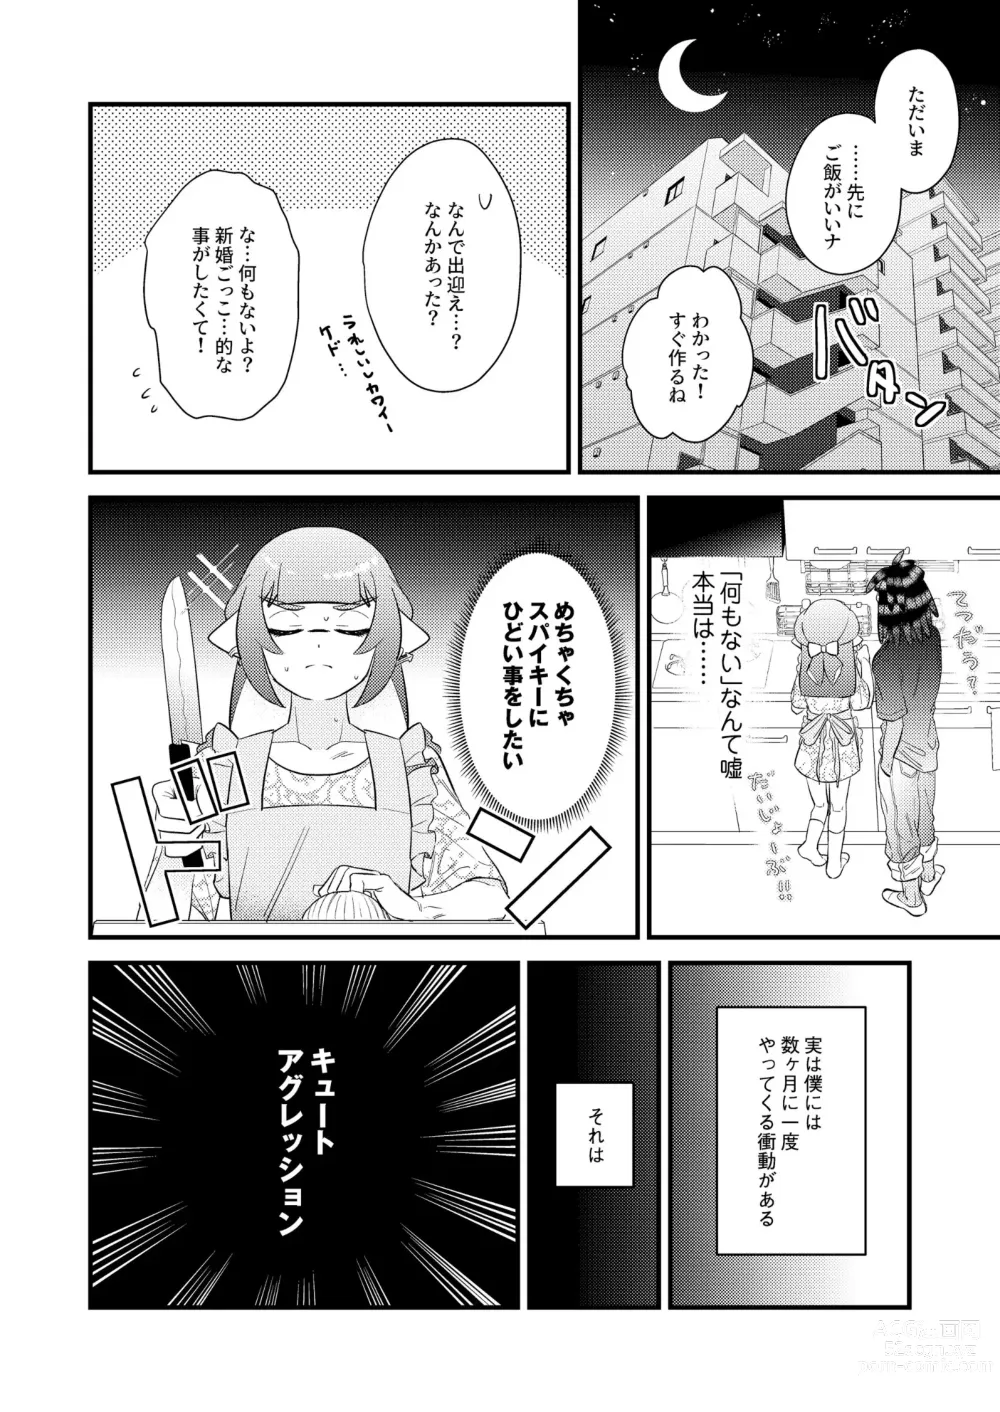 Page 5 of doujinshi Uketomete Hoshii no My Darling! - I want you to accept me my darling!